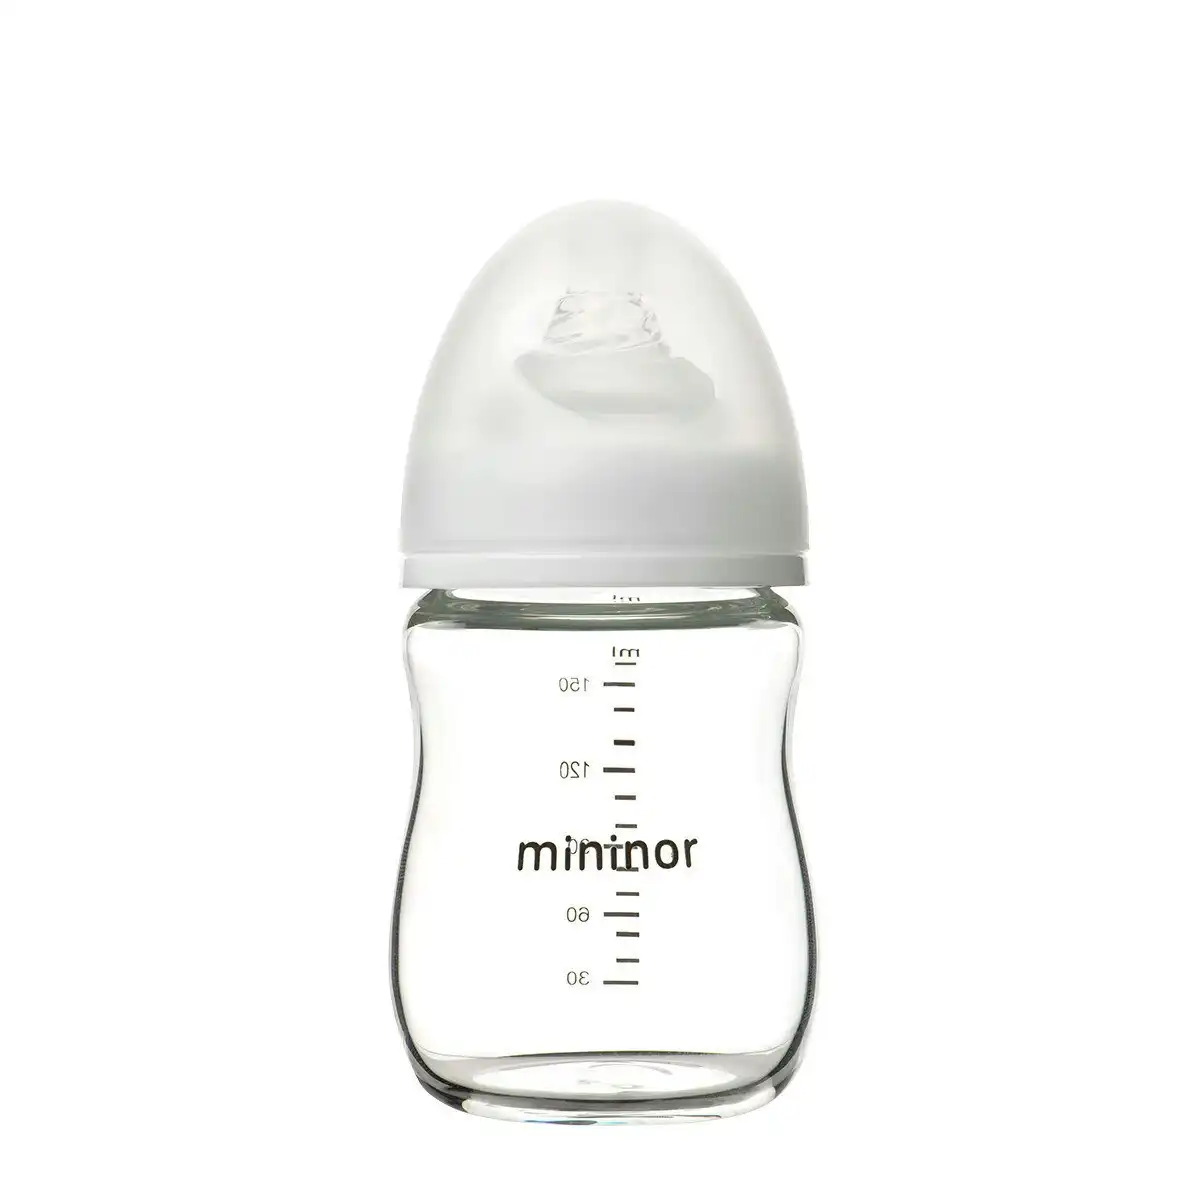 Mininor Baby/Infant 160ml Glass Feeding Bottle w/ Anti-Colic Silicone Teat Clear